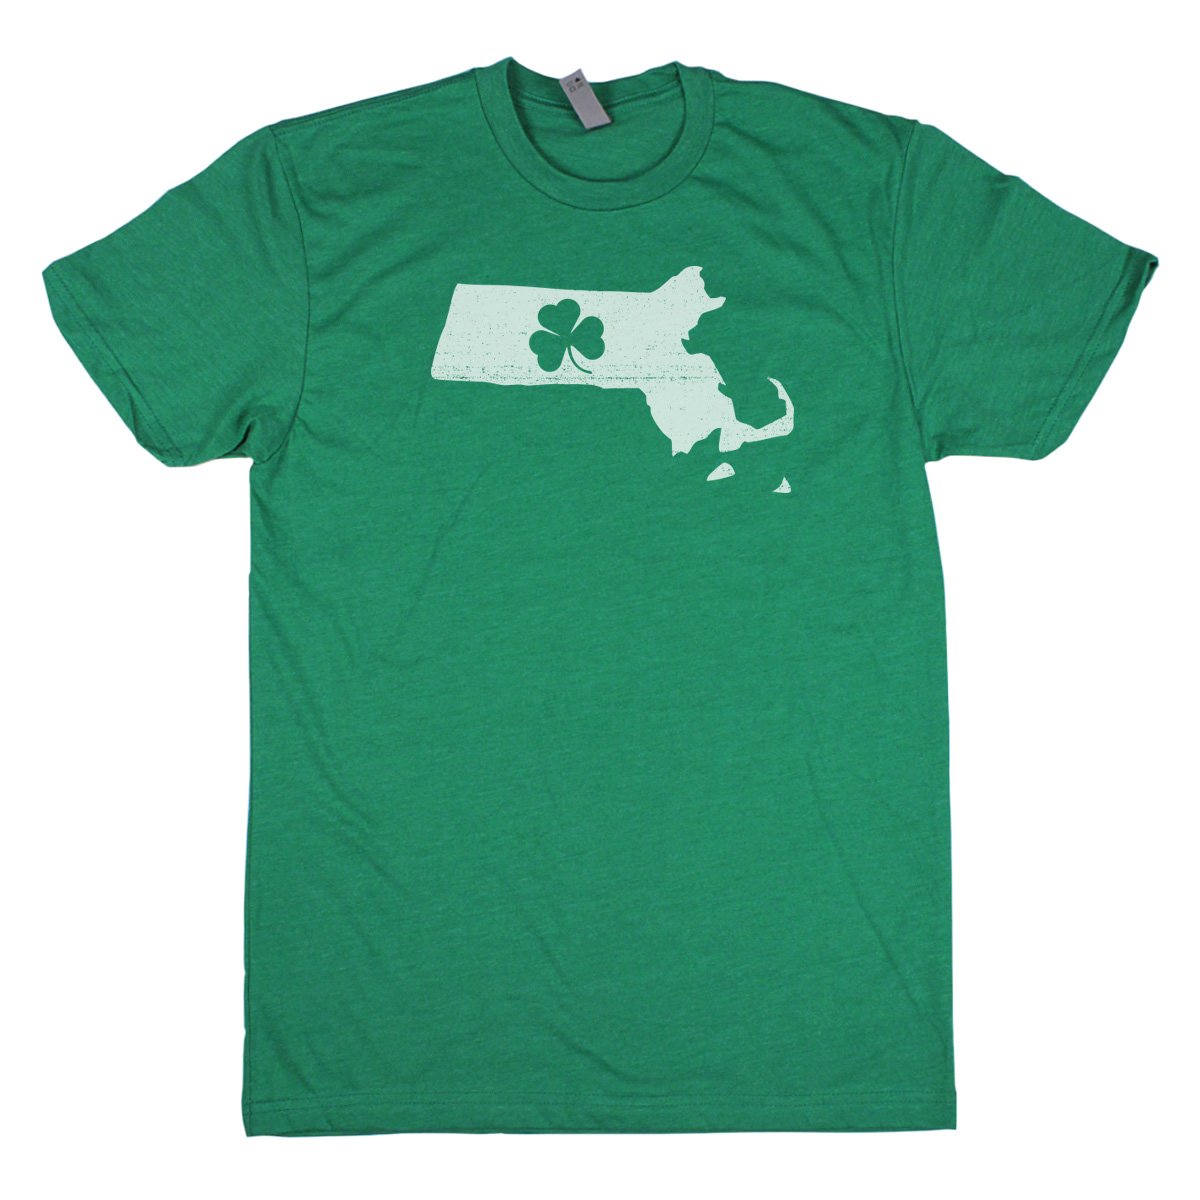 Shamrock Men's Unisex T-Shirt - Oklahoma